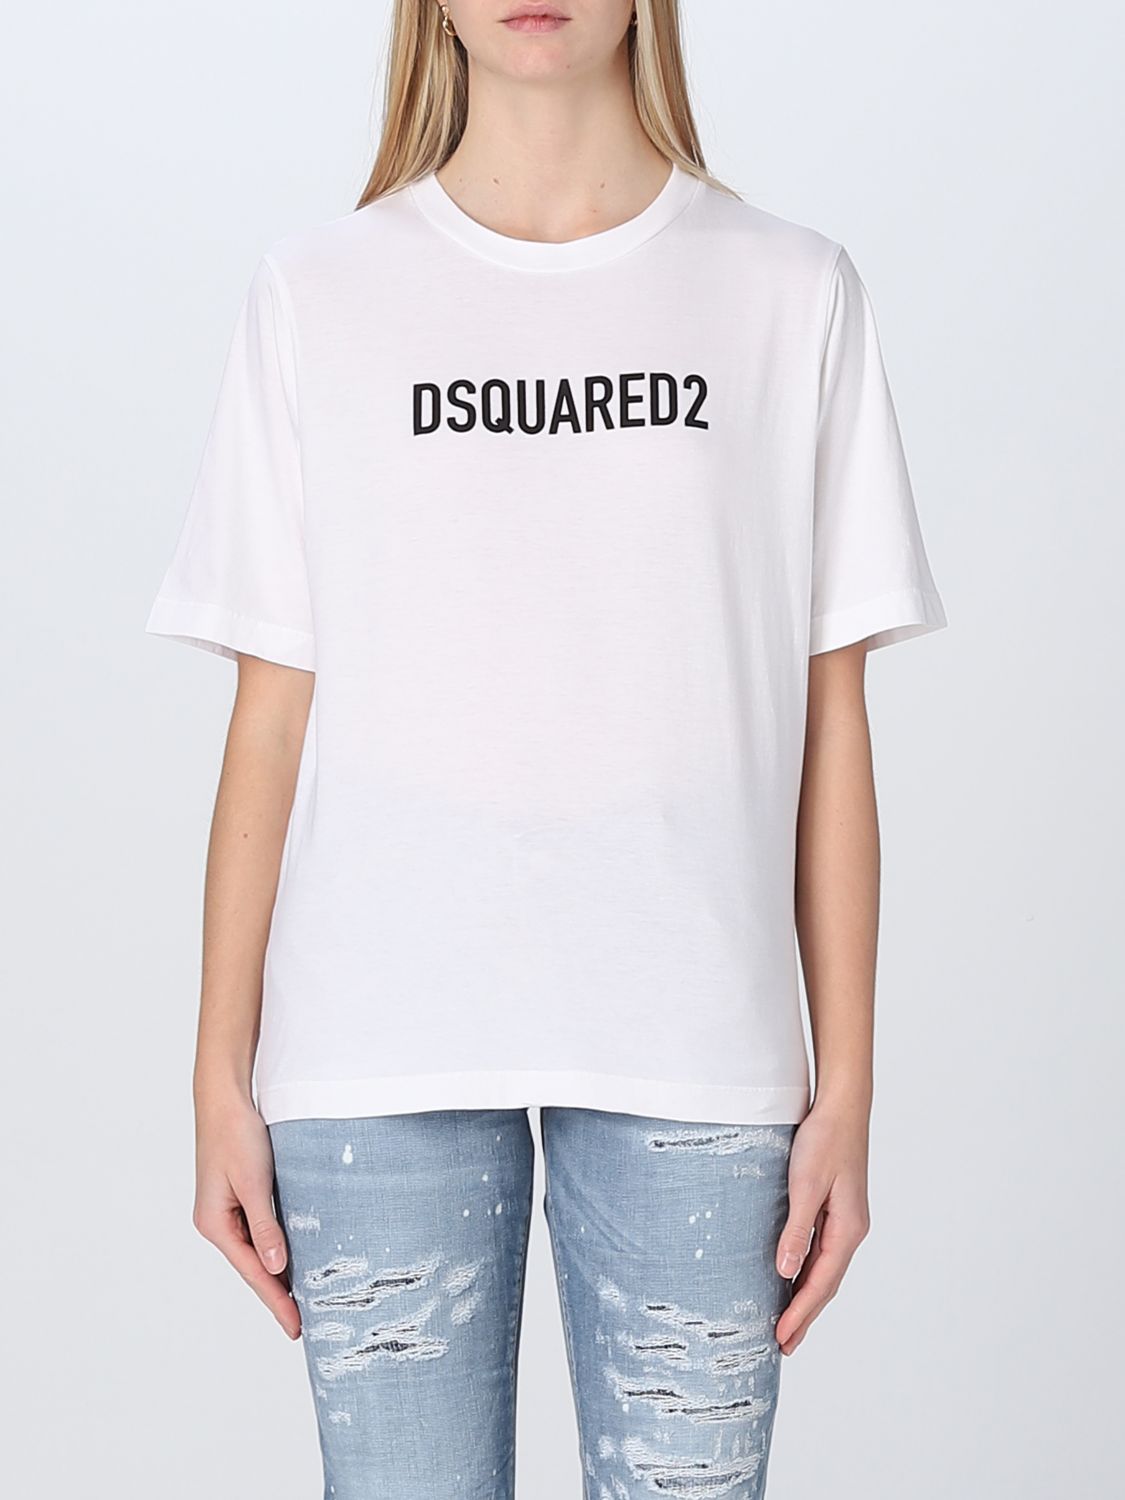 dsquared2 tシャツ